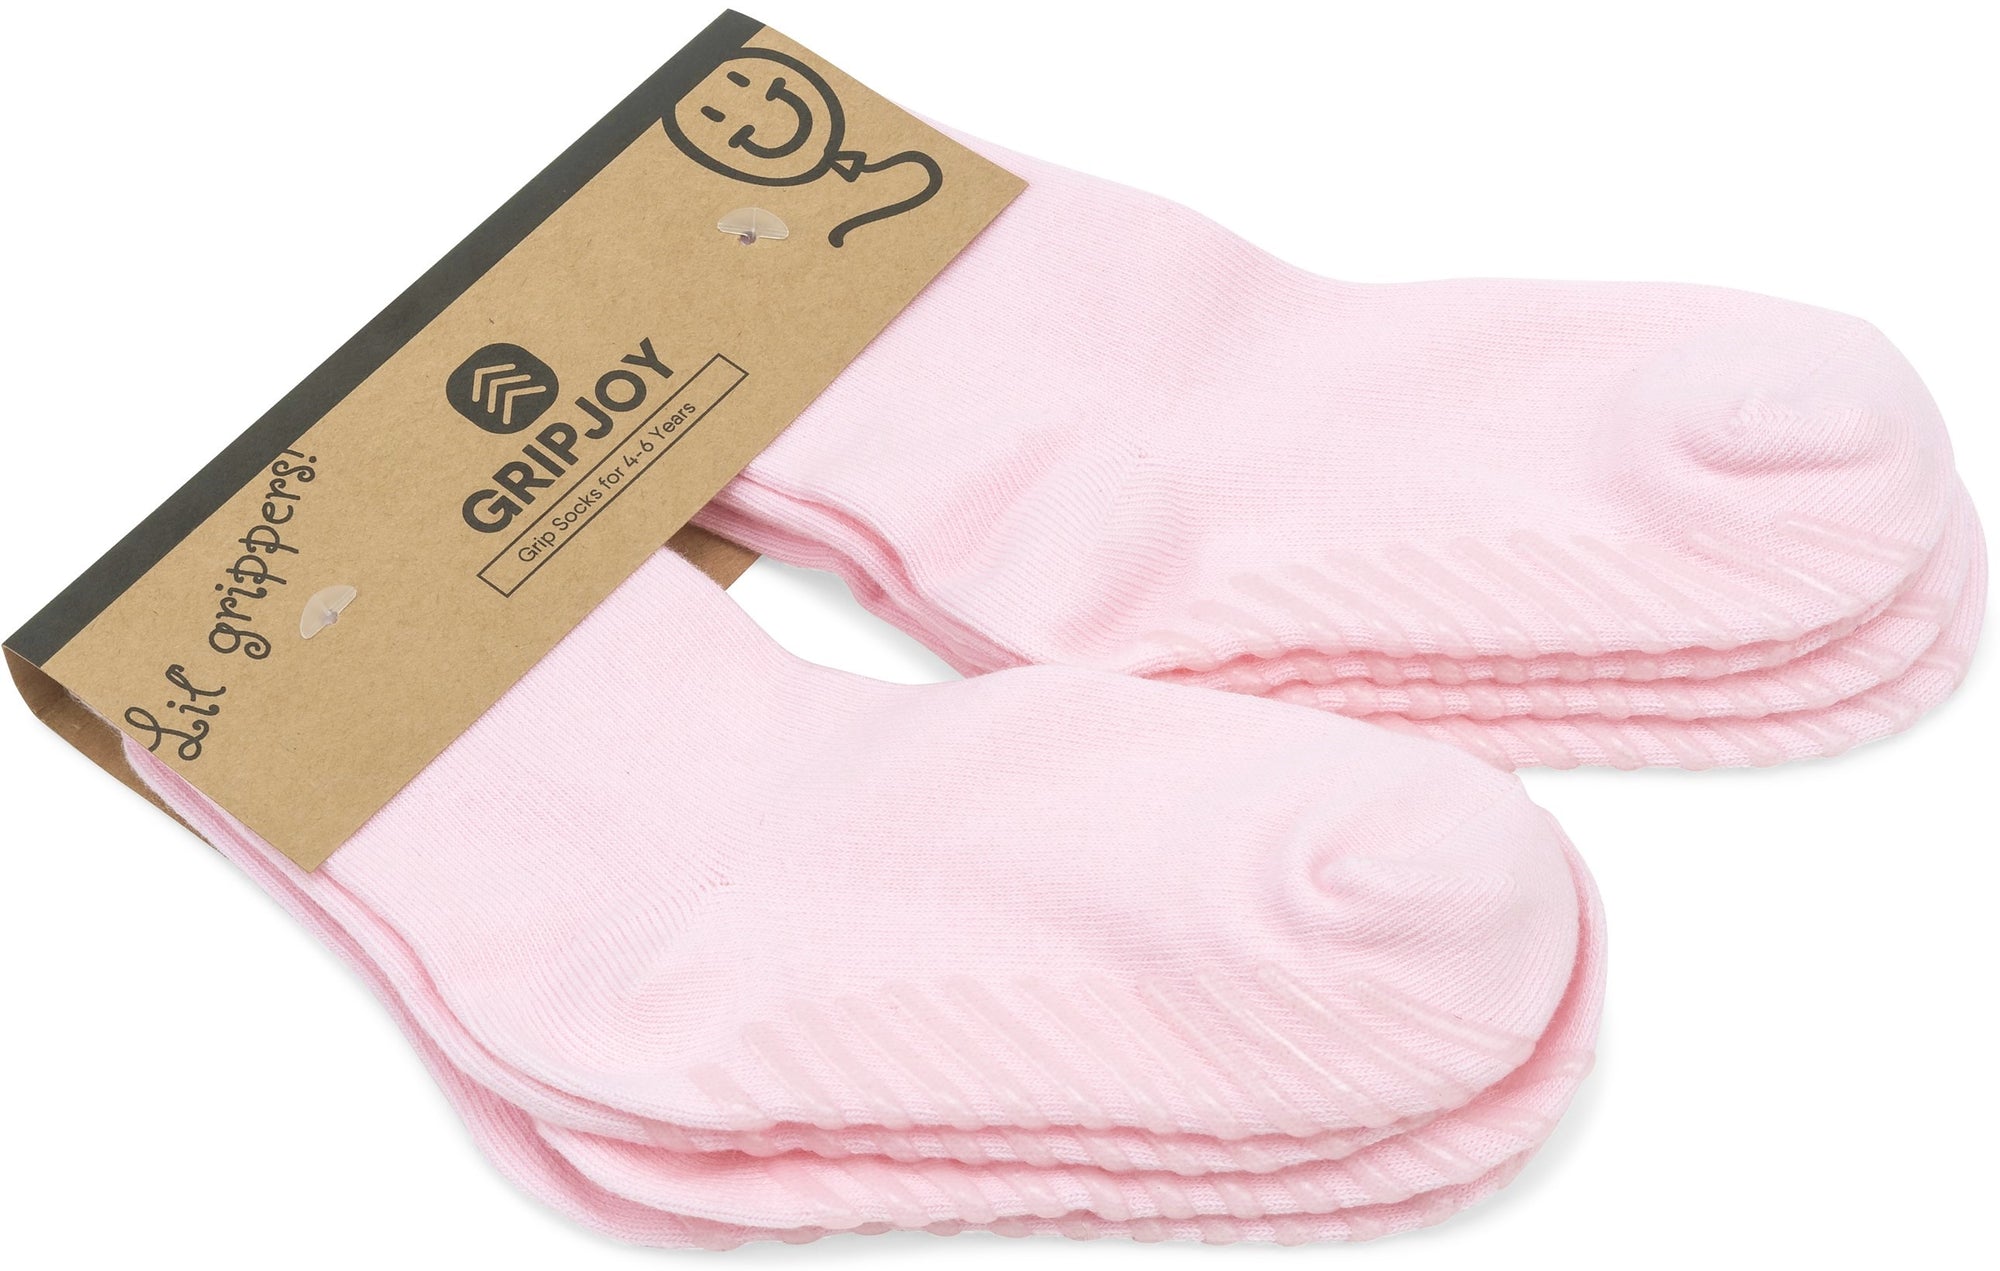 Pink Grip Socks for Toddlers & Kids - 4 pairs - Gripjoy Socks